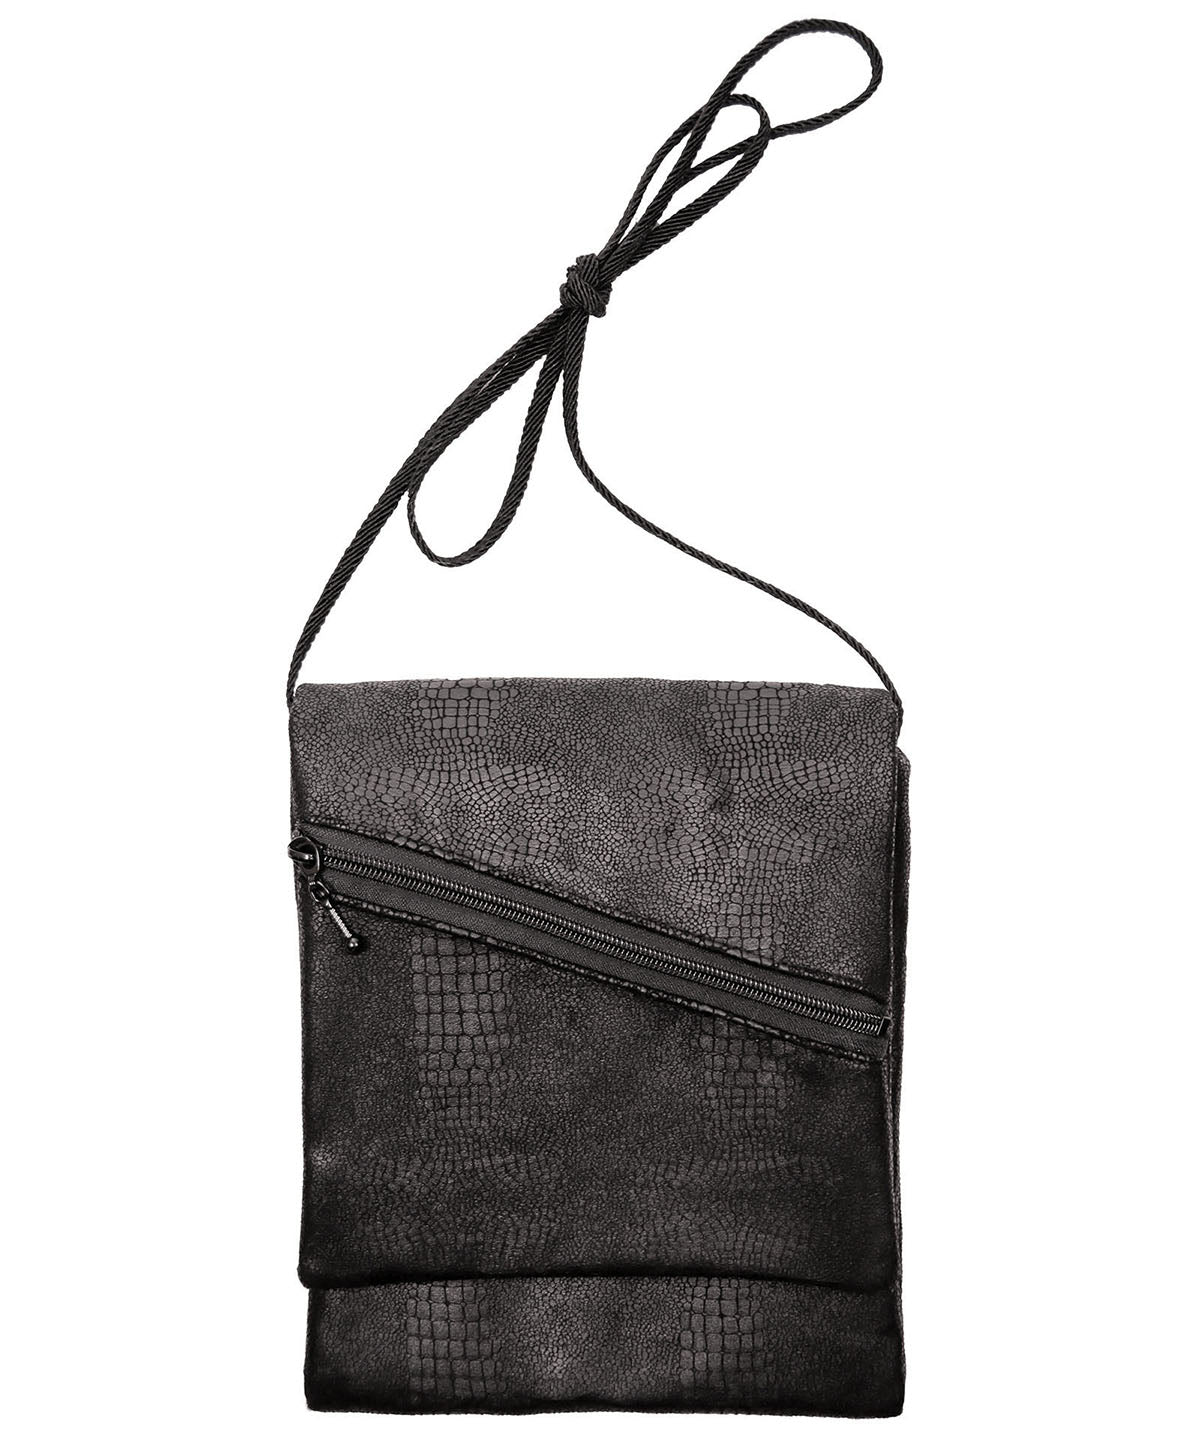 Vegan Leather Bags - Faux Leather Purses